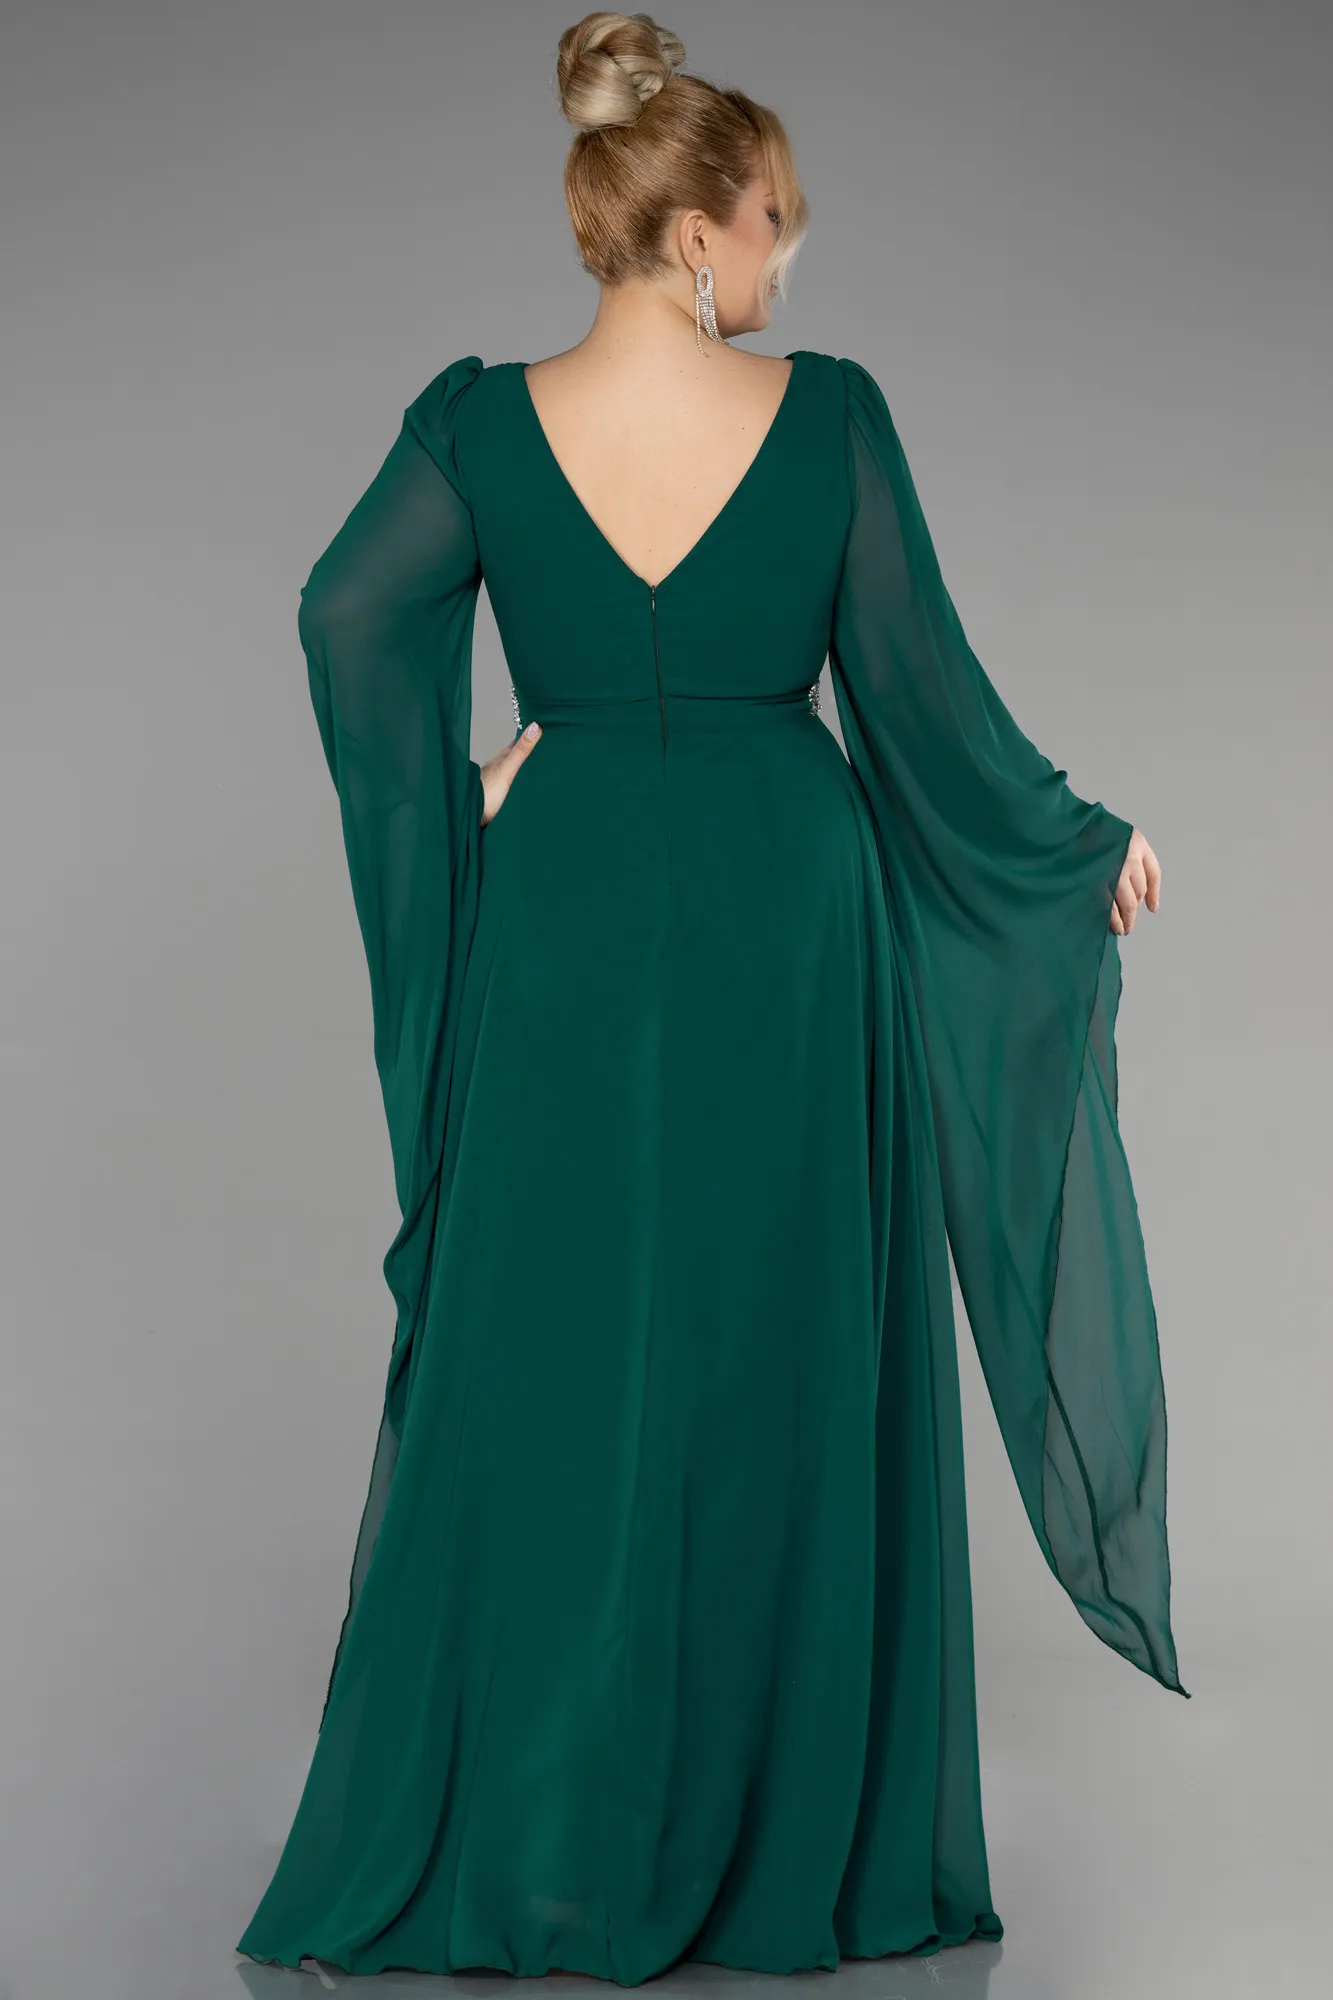 Emerald Green-Long Chiffon Plus Size Evening Dress ABU3543